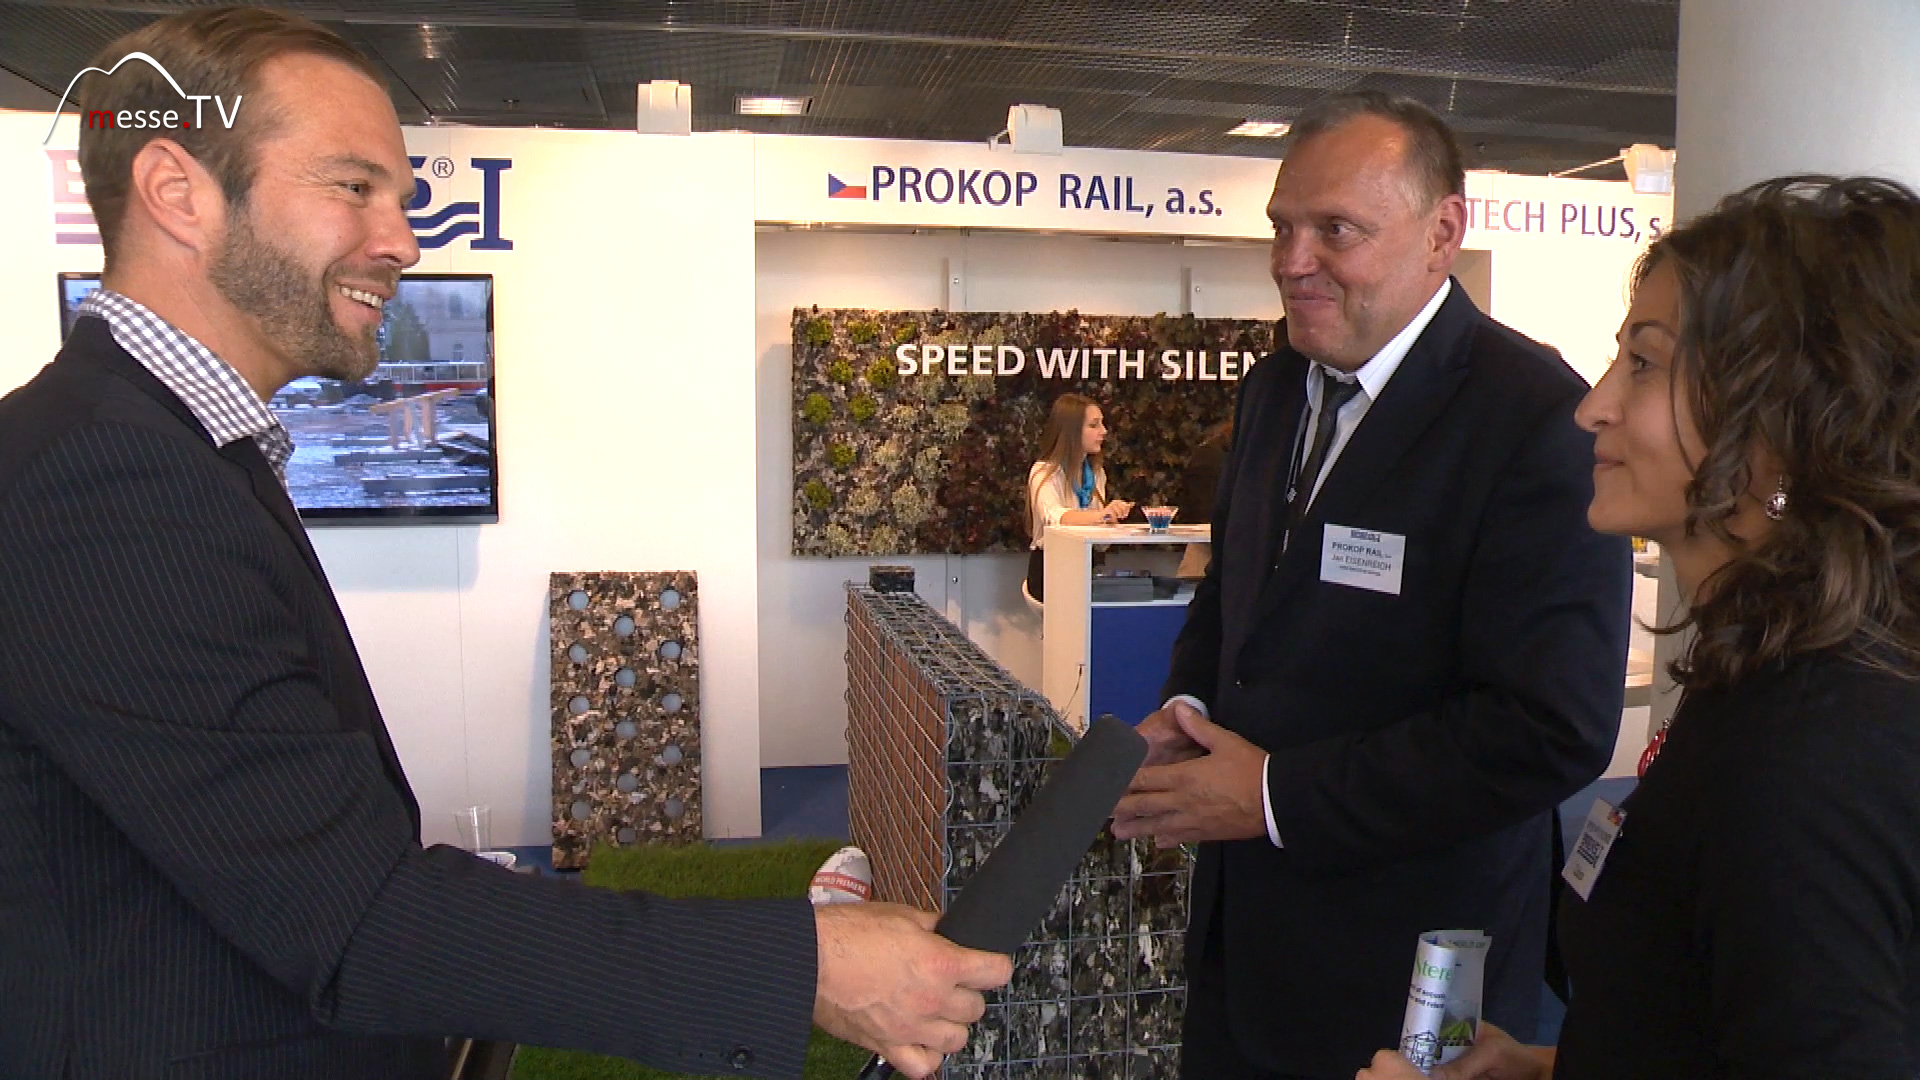 MesseTV Video Interview Prokop Rail